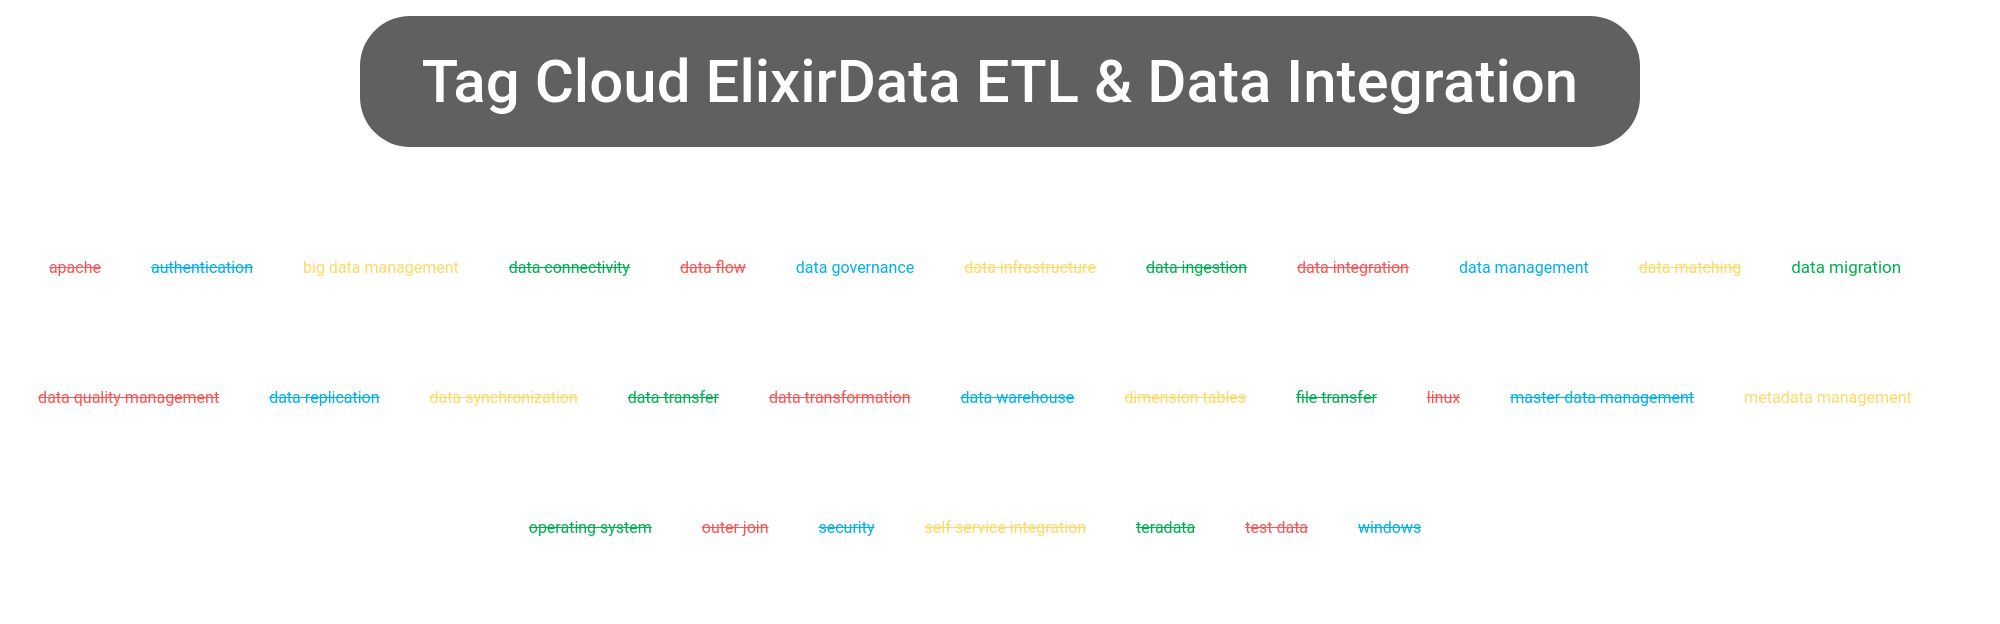 Tag cloud of the Elixir Data Platform software.